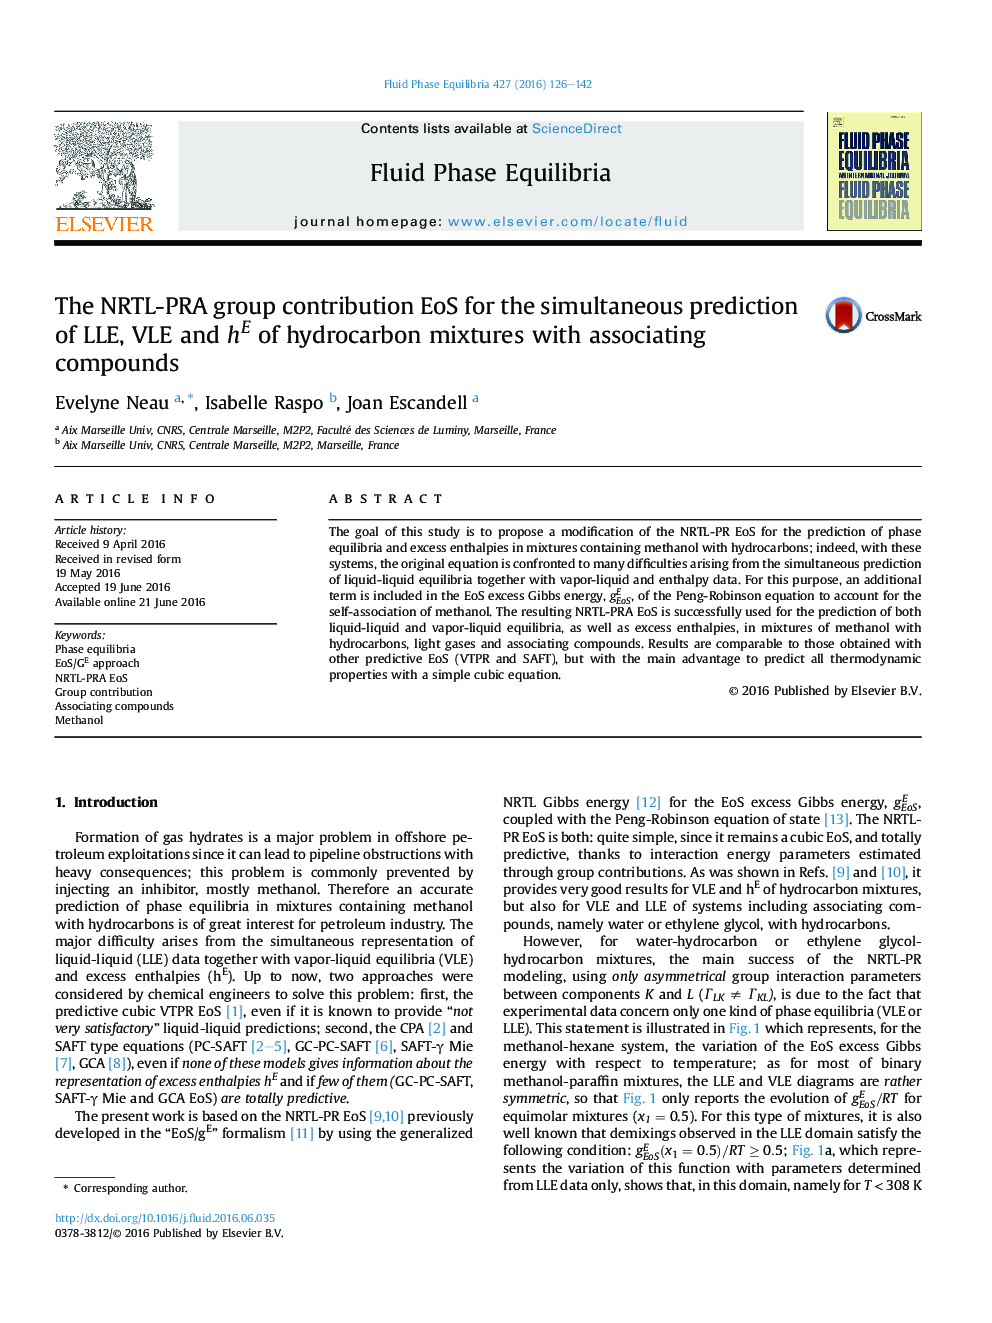 EOS سهم گروه NRTL-PRA برای پیش بینی همزمان LLE، VLE و HE مخلوط های هیدروکربنی با ترکیبات مرتبط